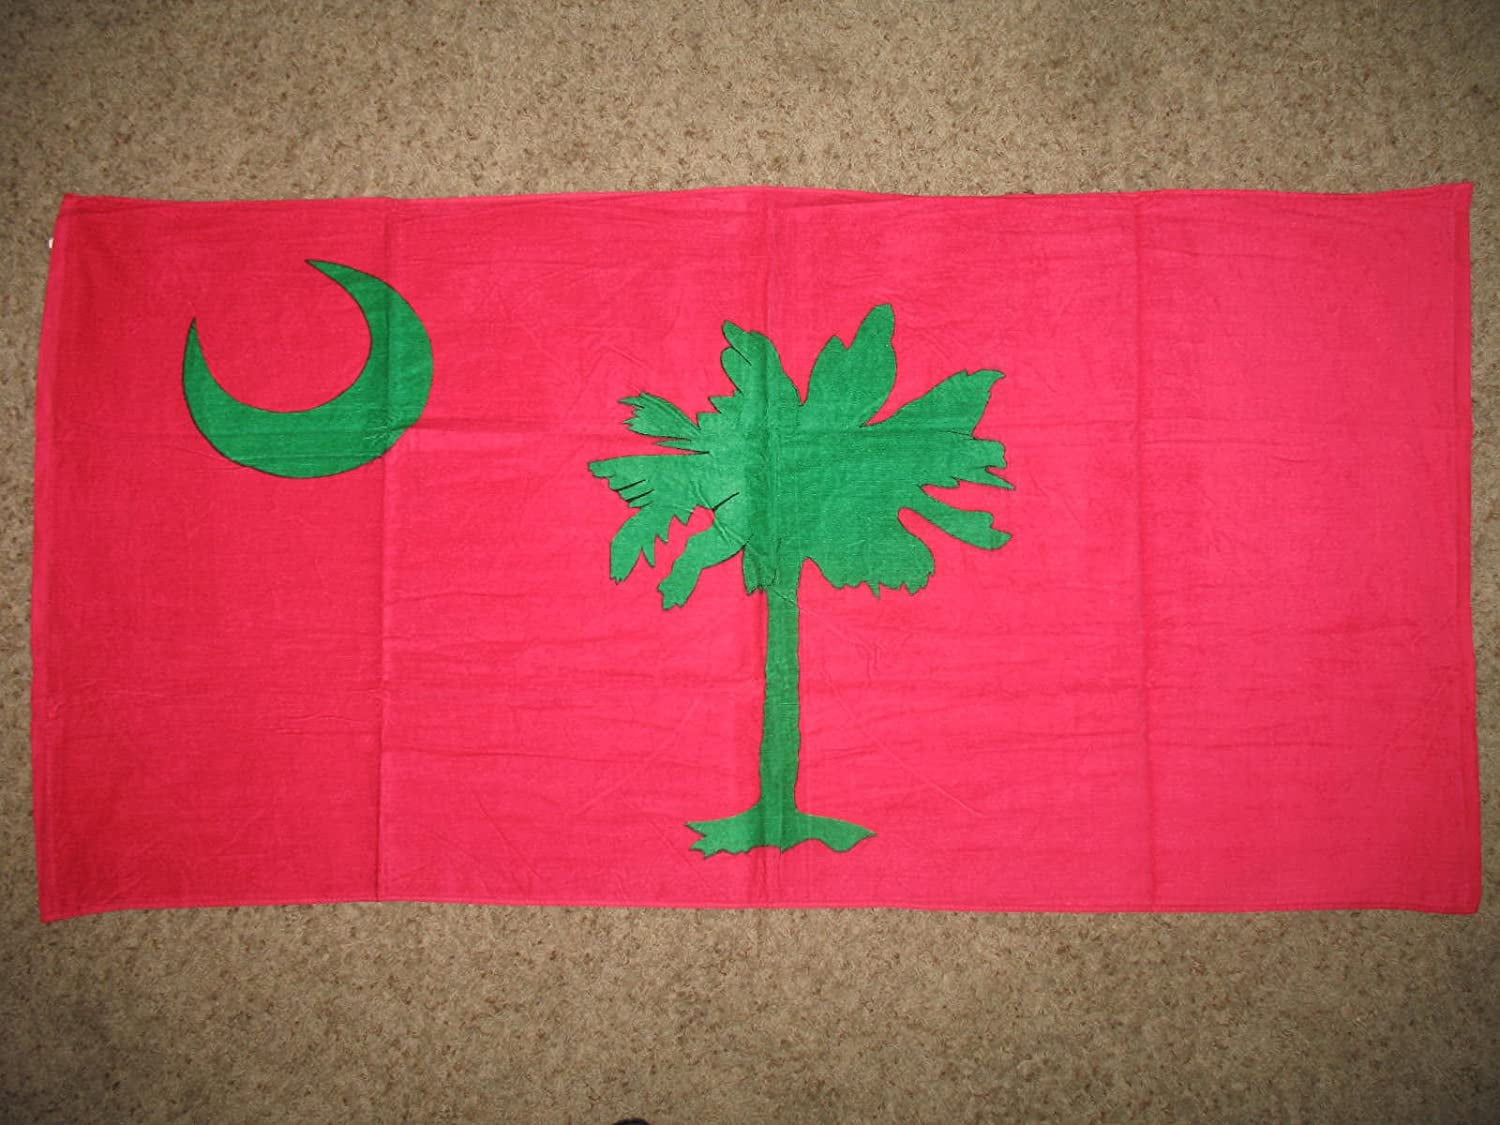 Cotton Twill Pink SC South Carolina 30 x 60 Beach Towel